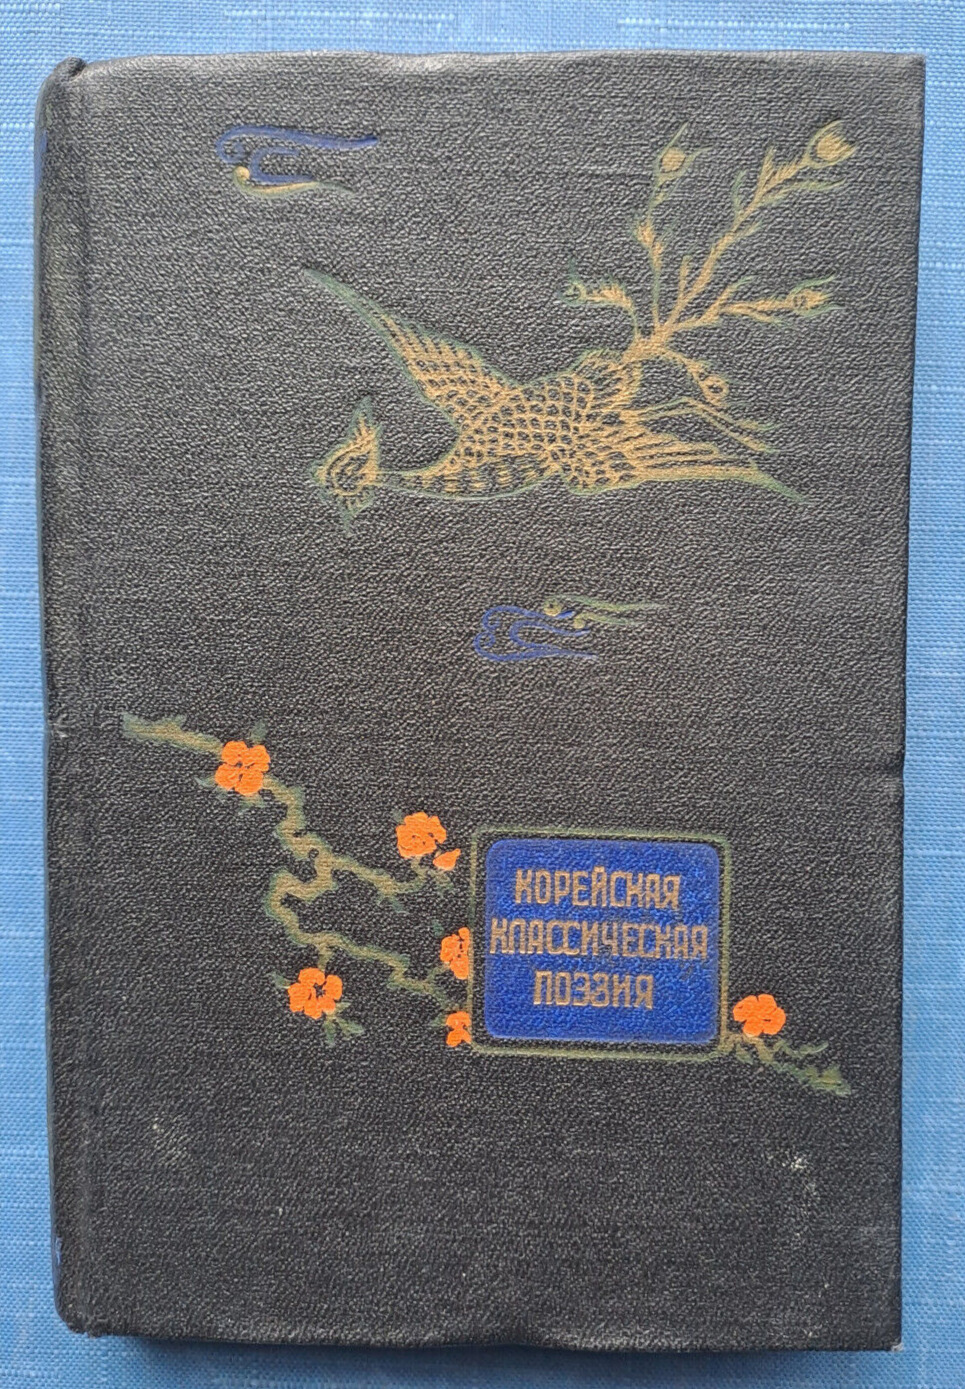 1956 Korean Classical Poetry Korea Translation by Anna Akhmatova Russian book